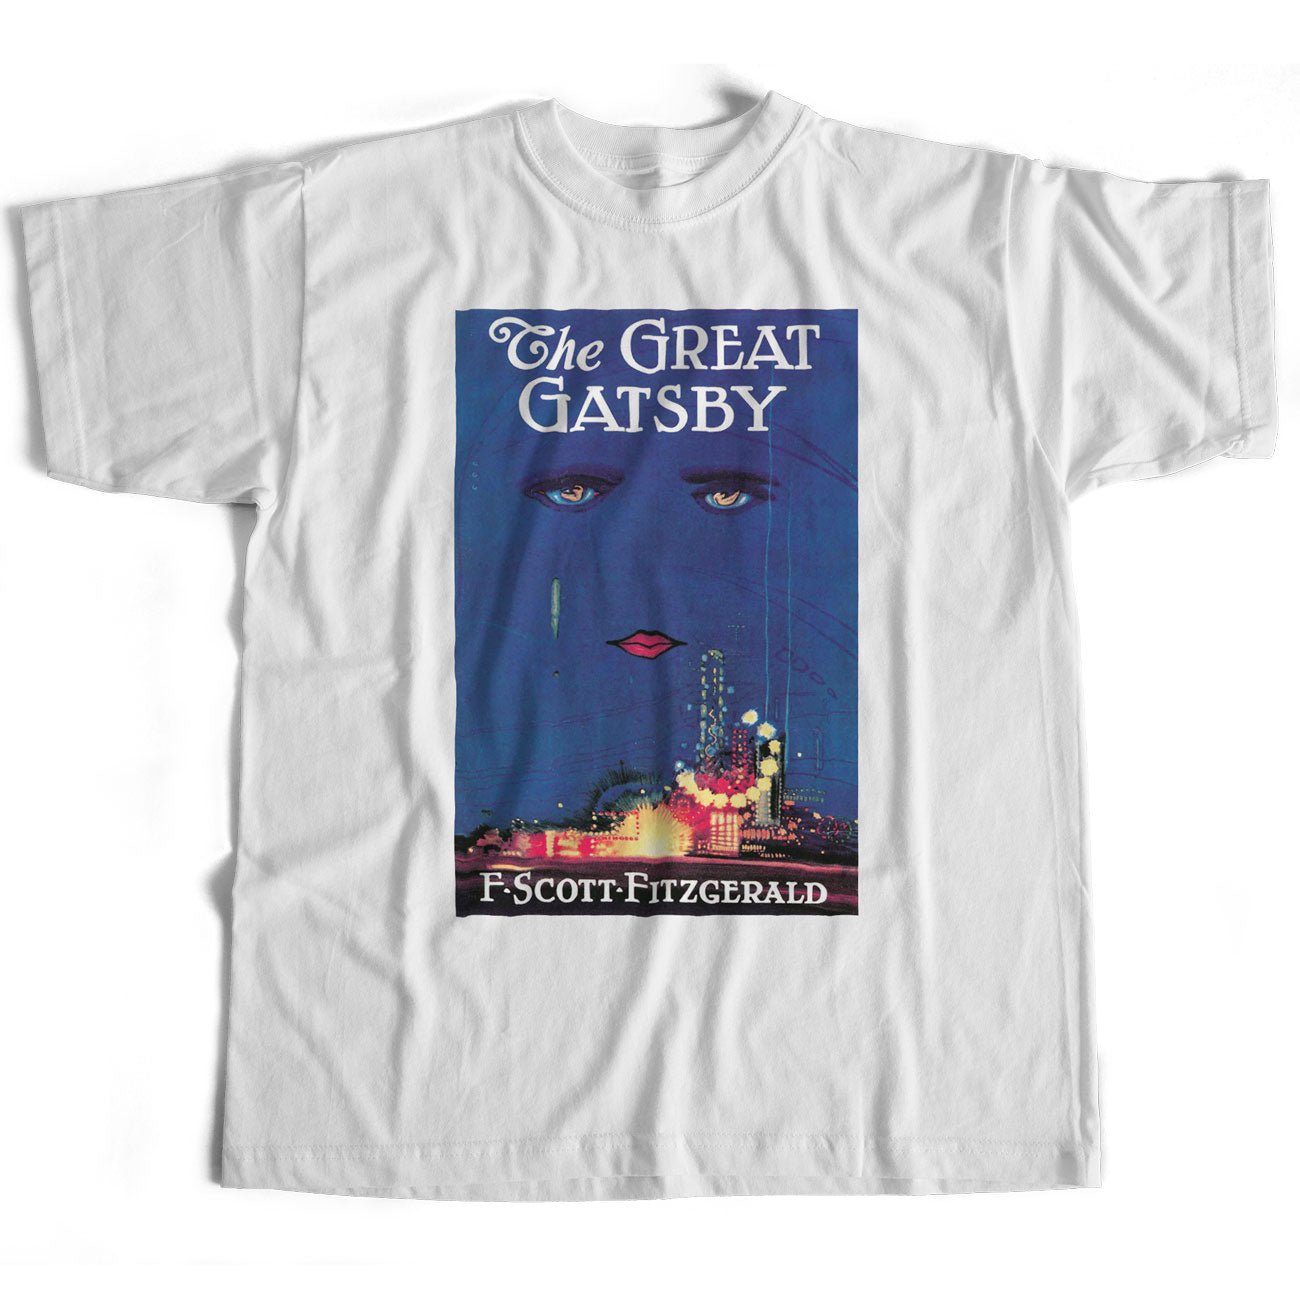 The Great Gatsby 1st Edition Cover T Shirt - F Scott Fitzgerald Classic Literature